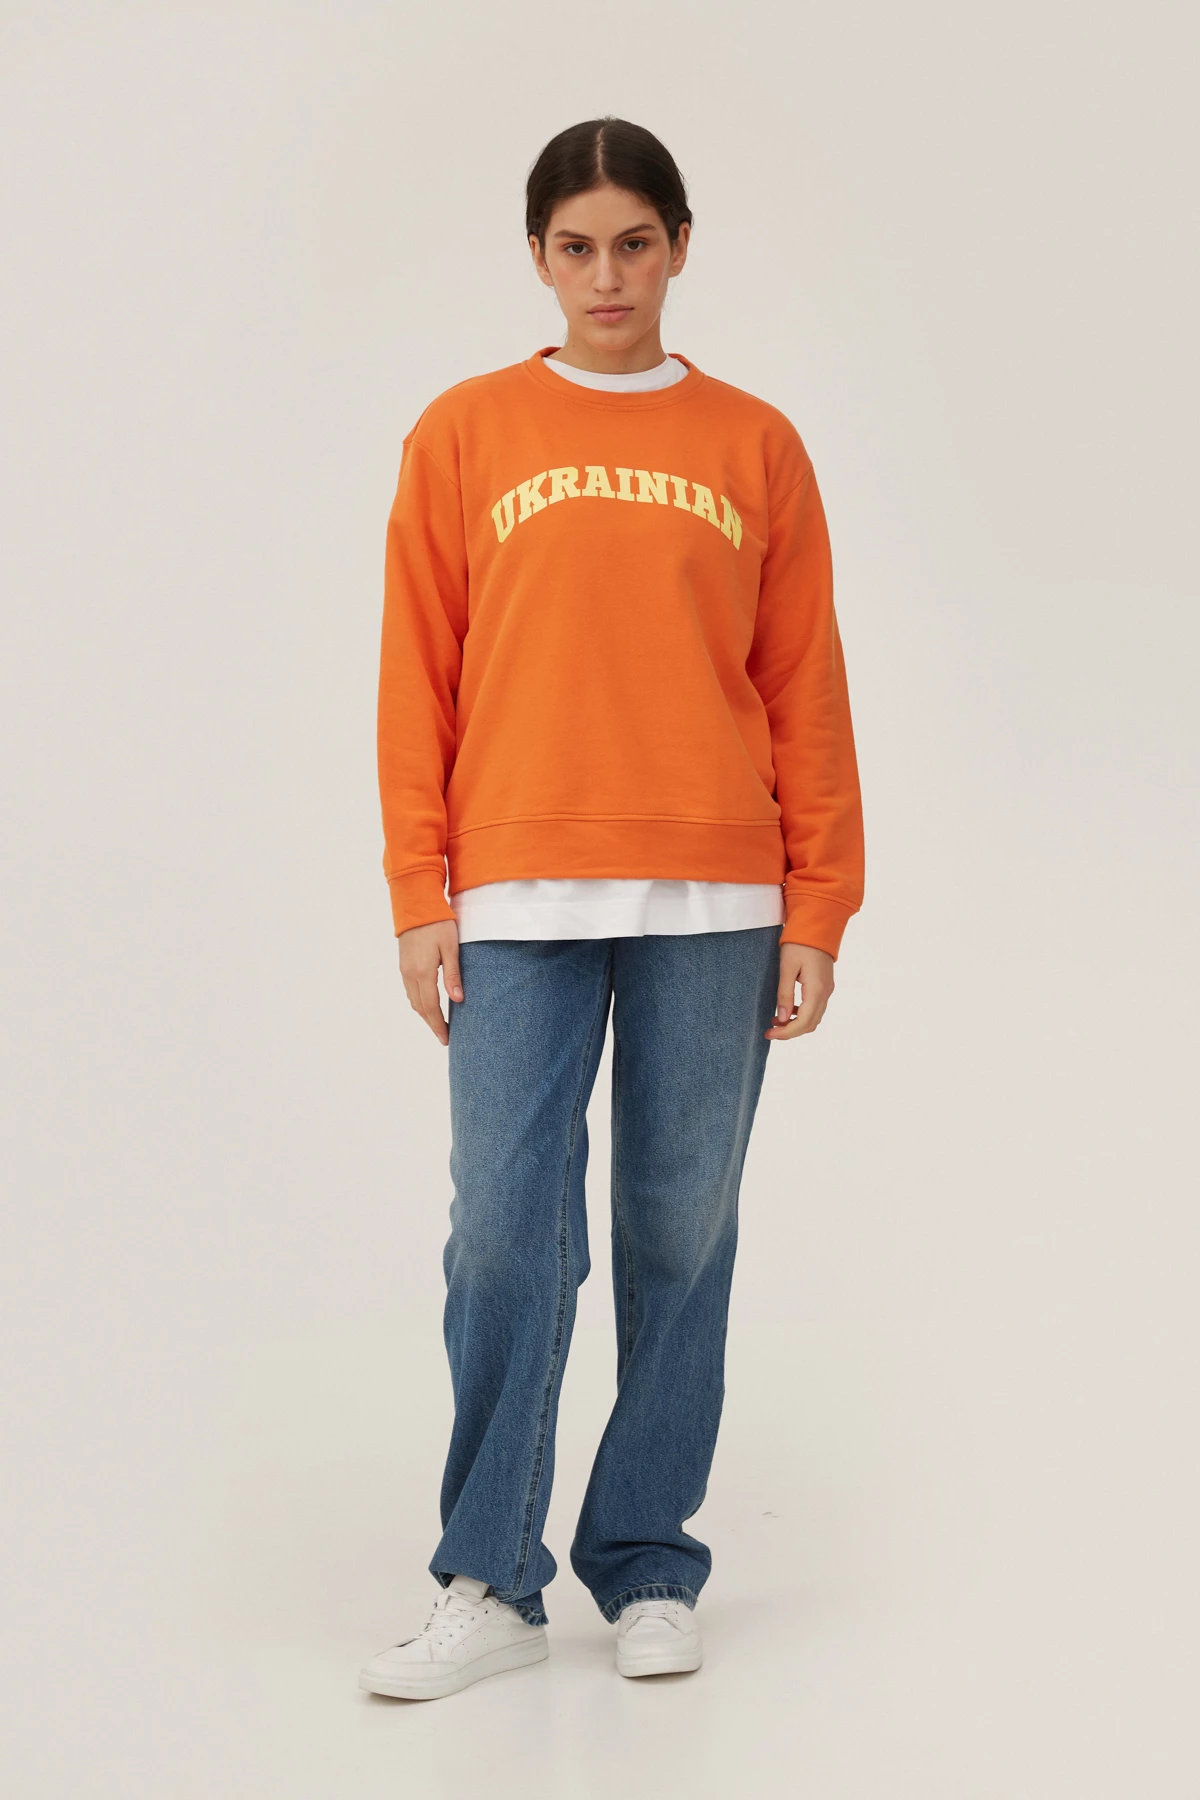 Orange jersey sweatshirt with print "Ukrainian", photo 2